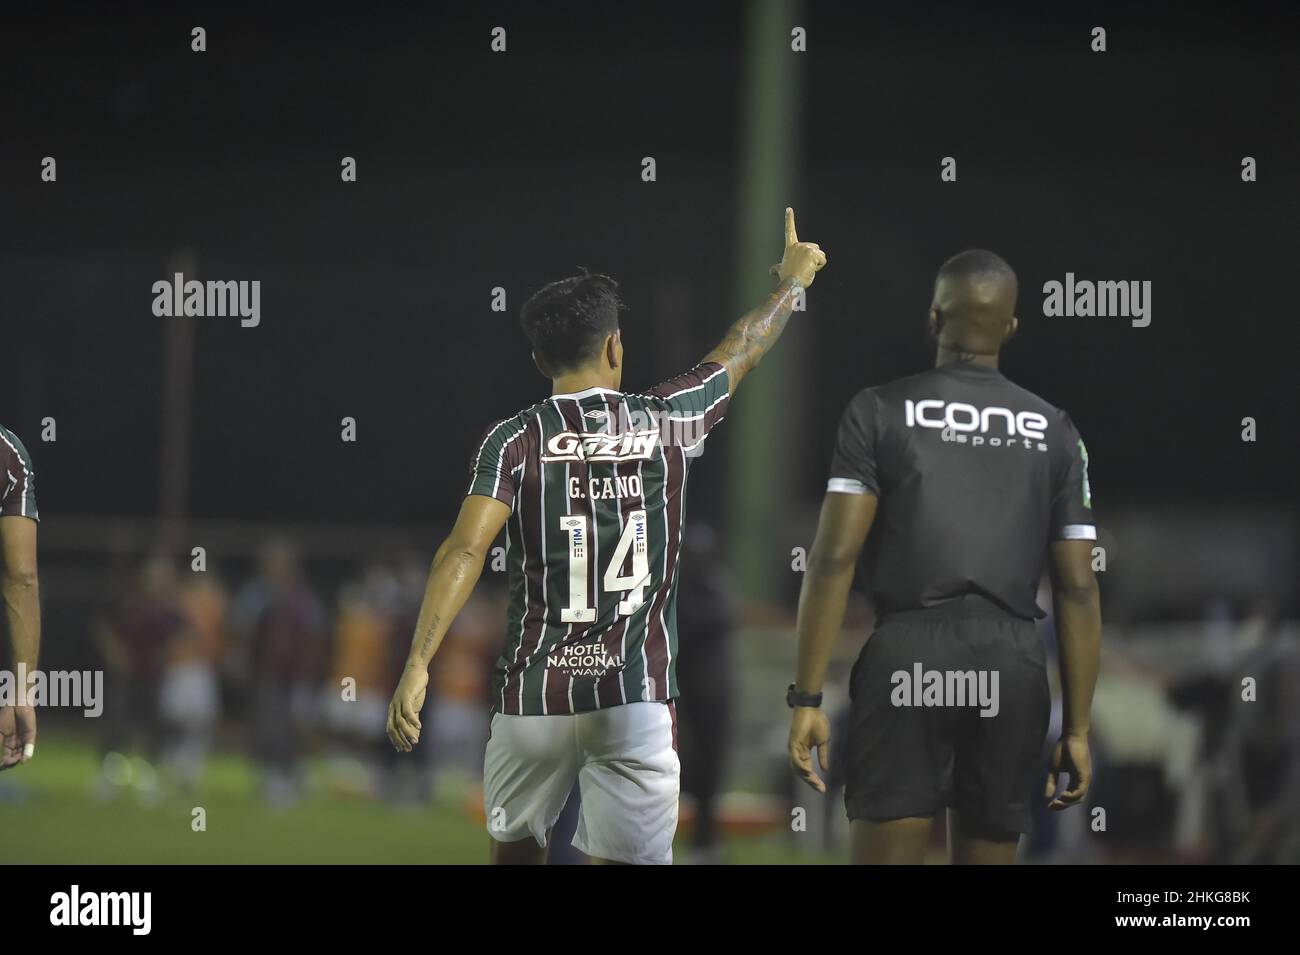 Rio de Janeiro-Brazil February 03, 2022, Fluminense football player Germãn Cano scores his first goal, during the match between Fluminense and Audax, Stock Photo